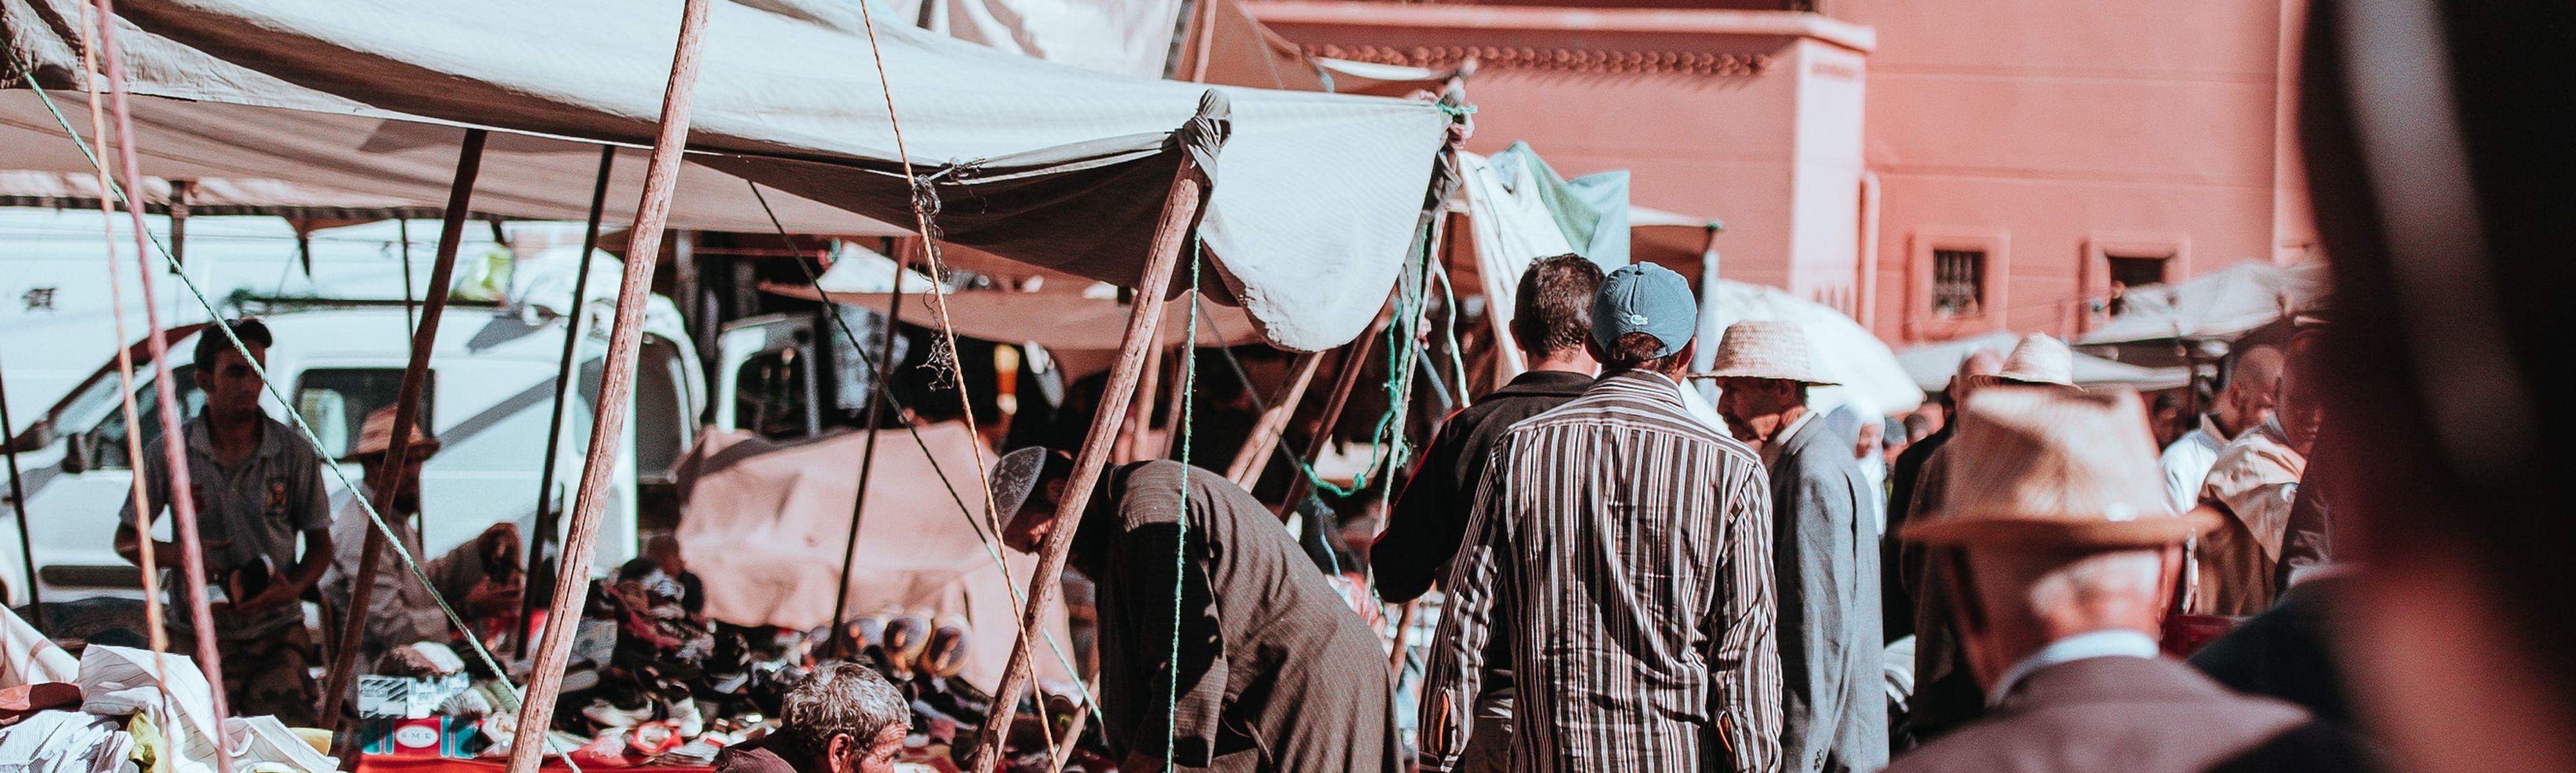 people walking through souks in marrakech